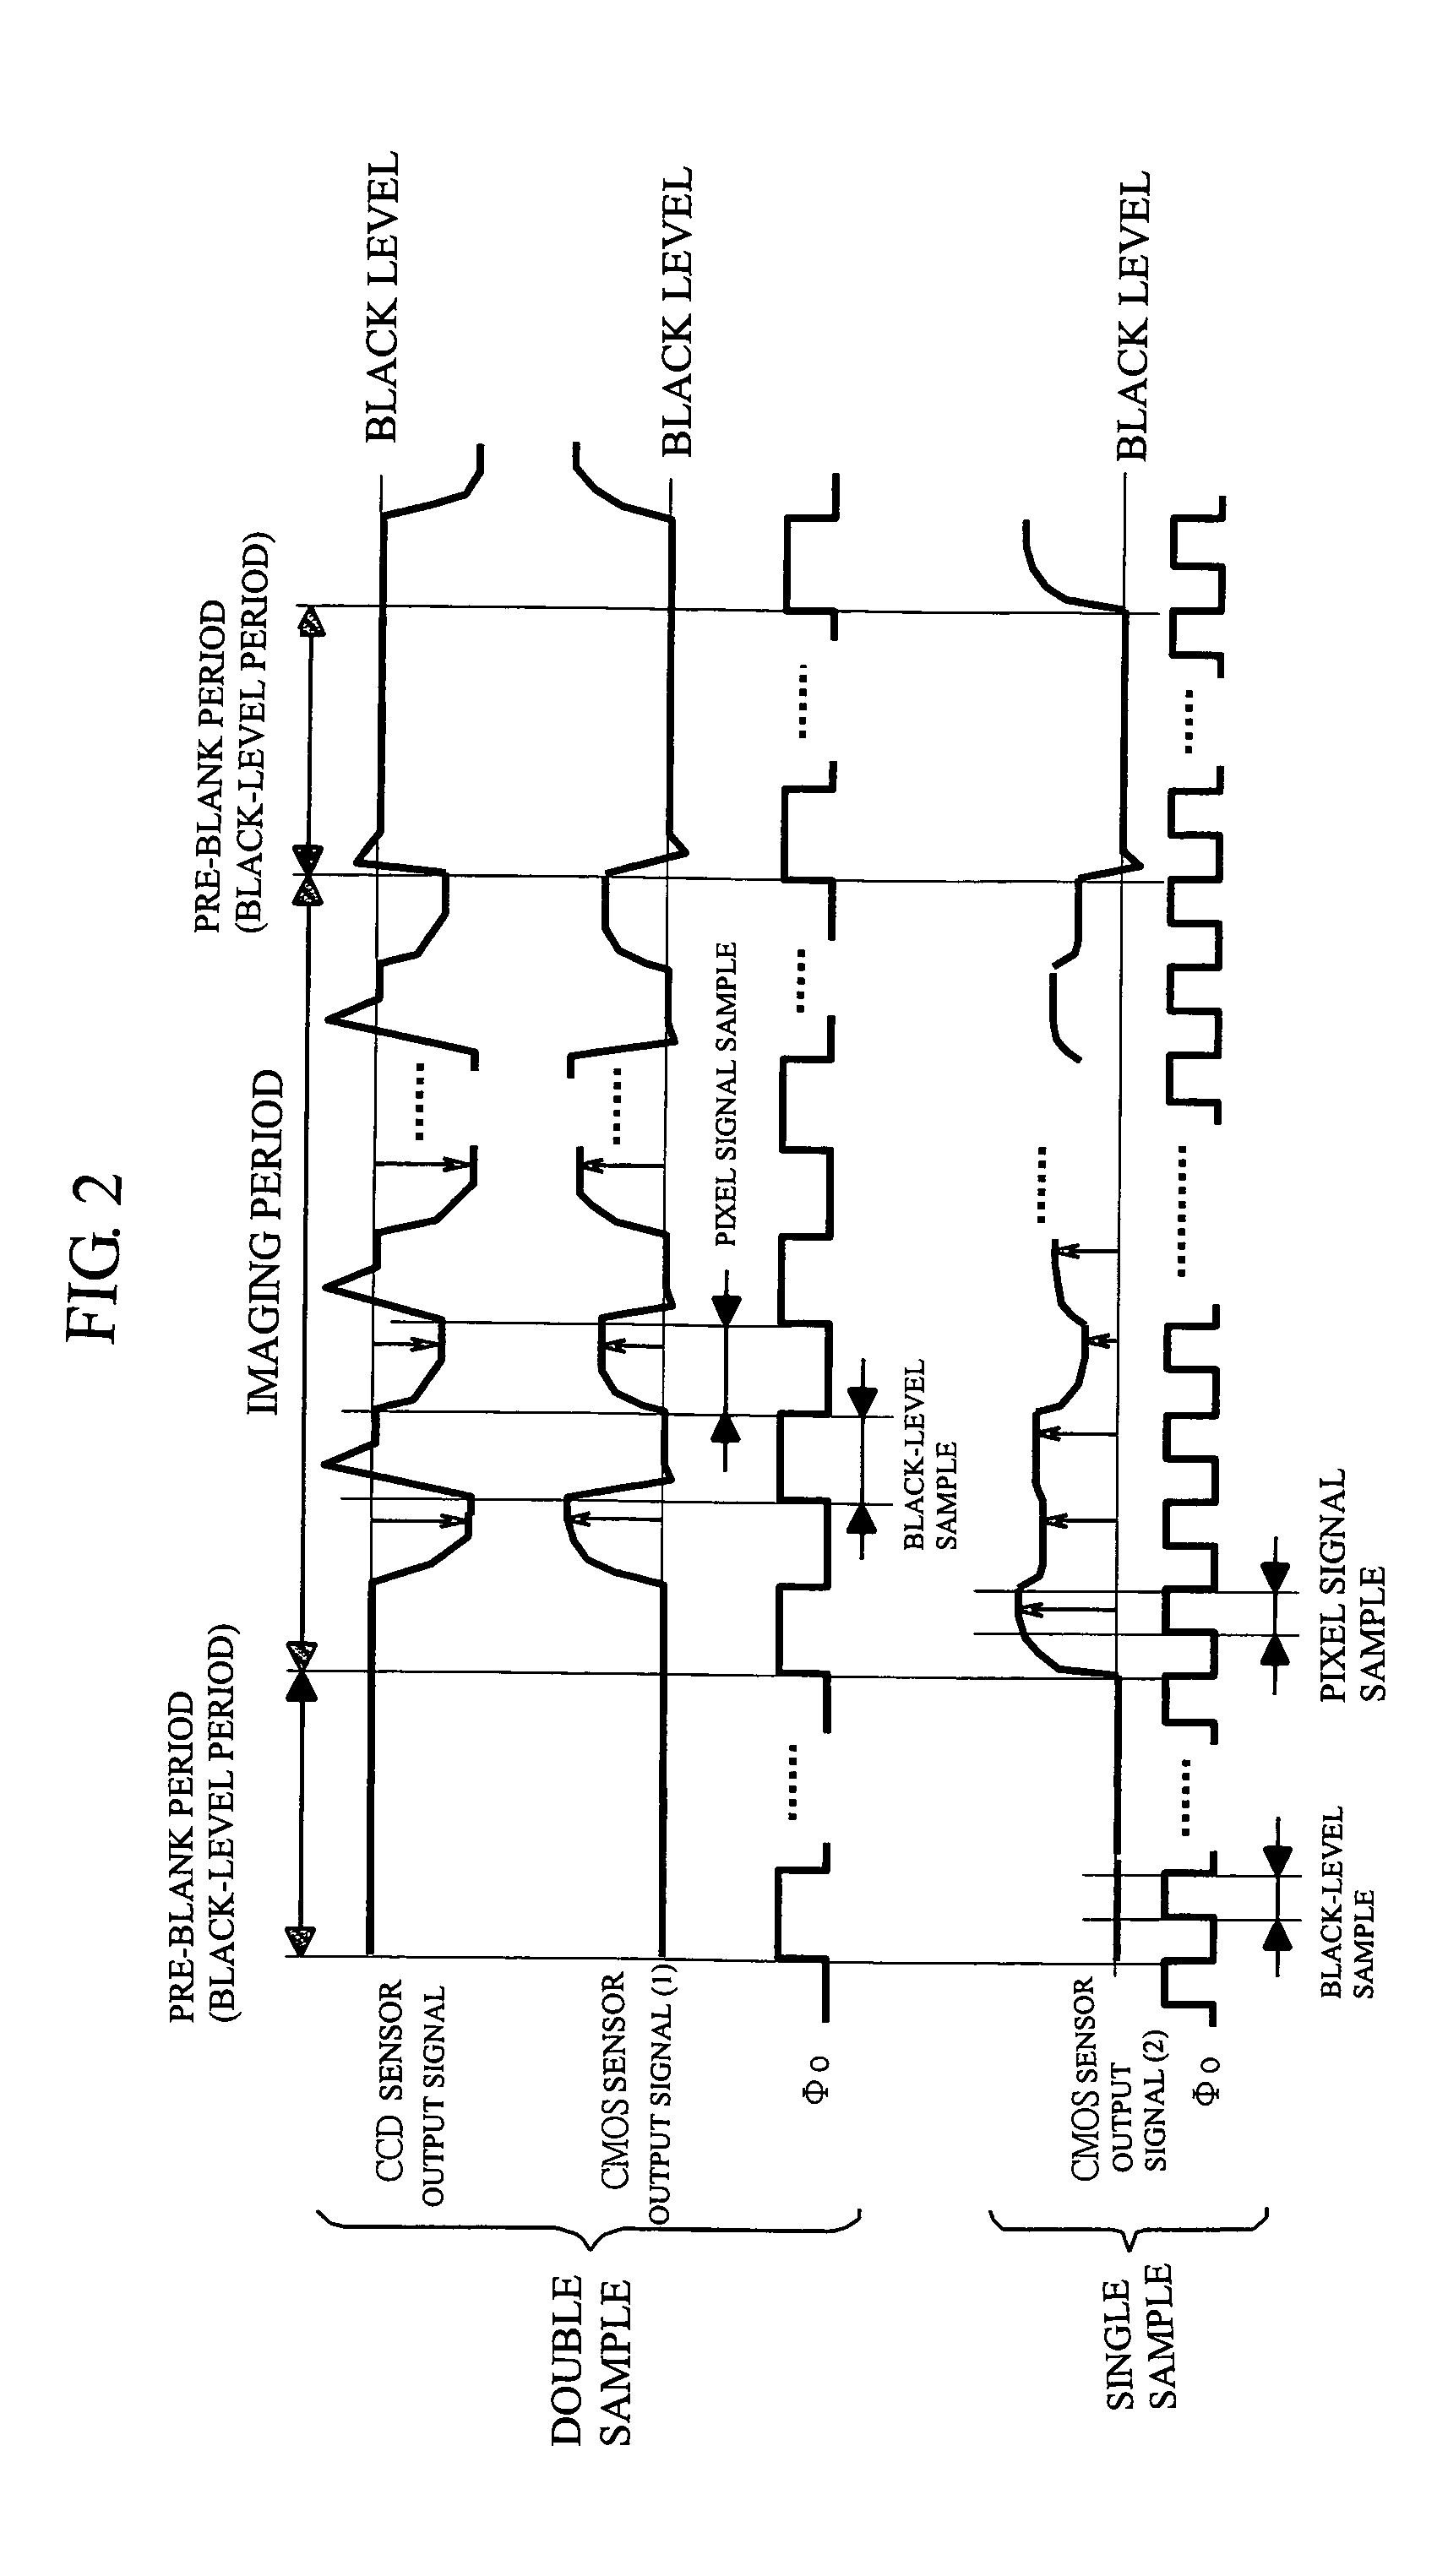 Image-sensor signal processing circuit